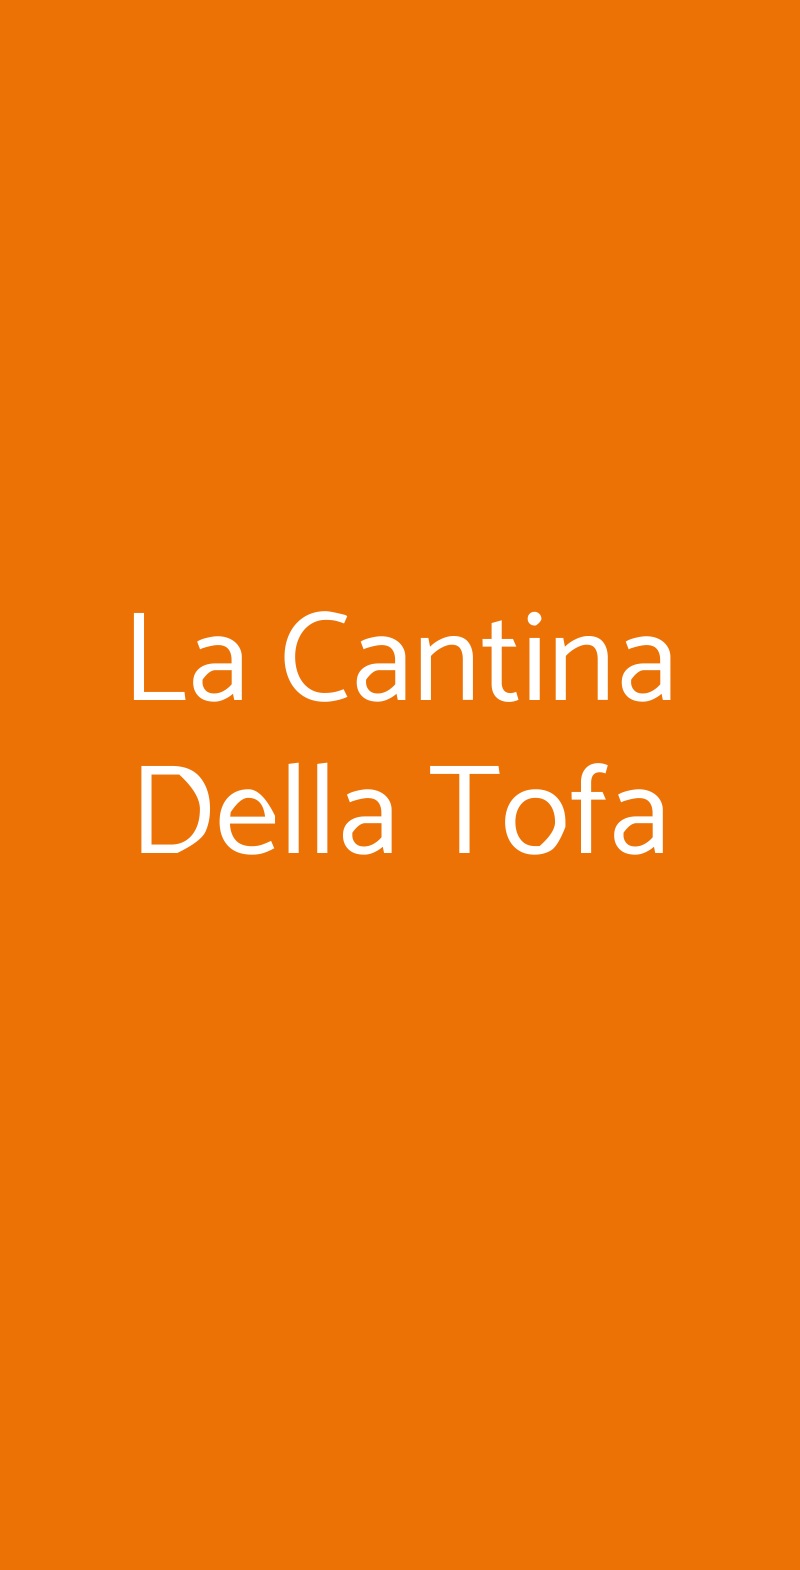 La Cantina Della Tofa Napoli menù 1 pagina